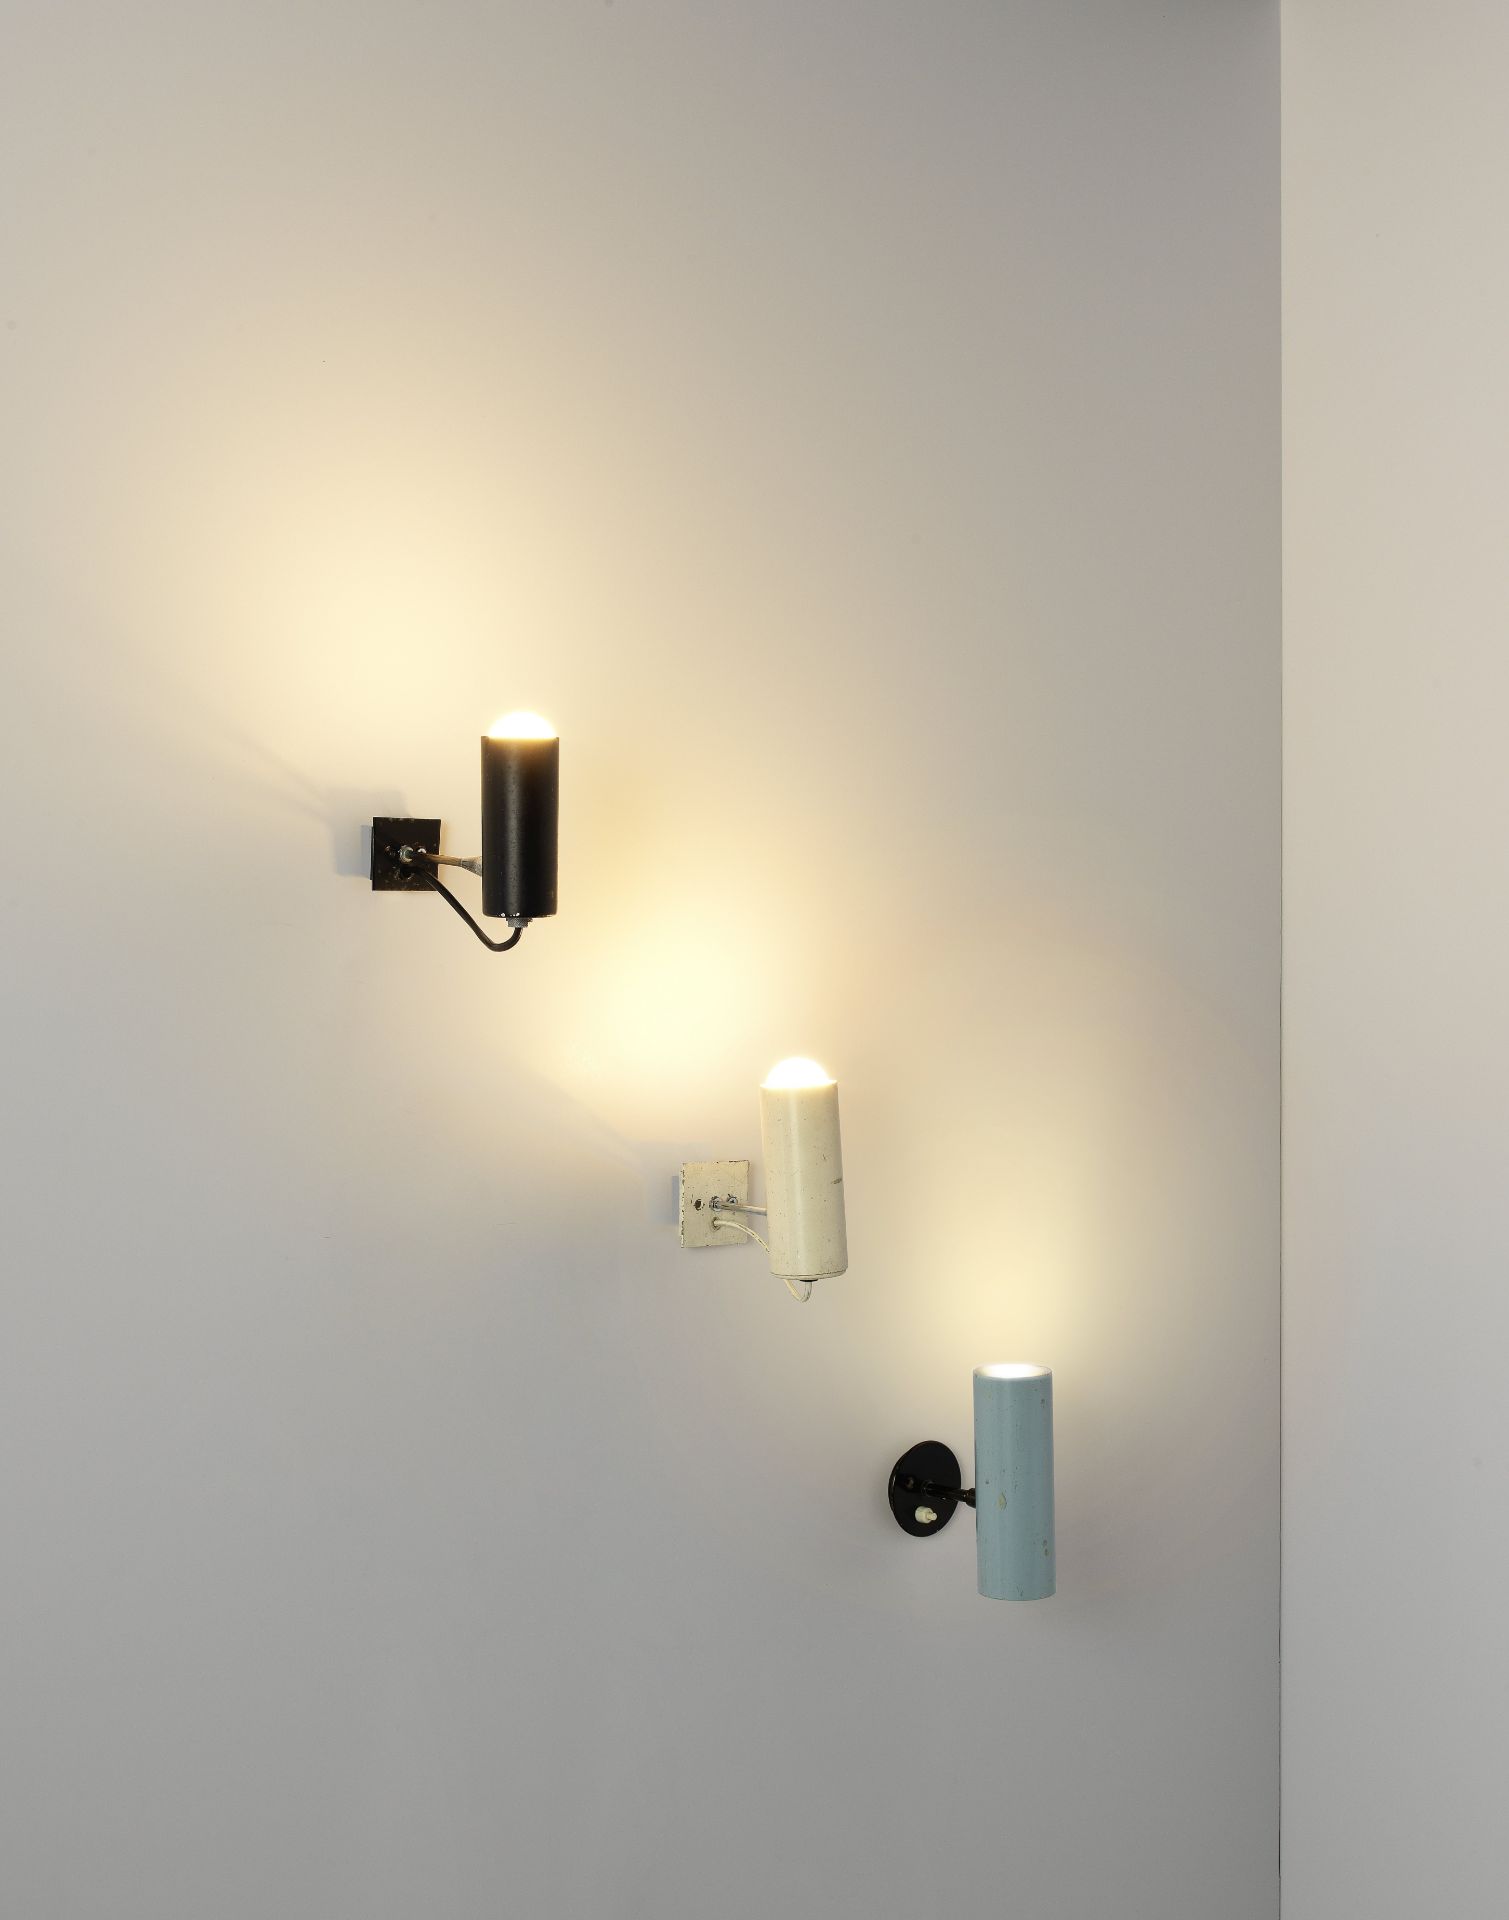 Gino Sarfatti Group of three wall lights, model nos. 31 and 36, 1950-1955